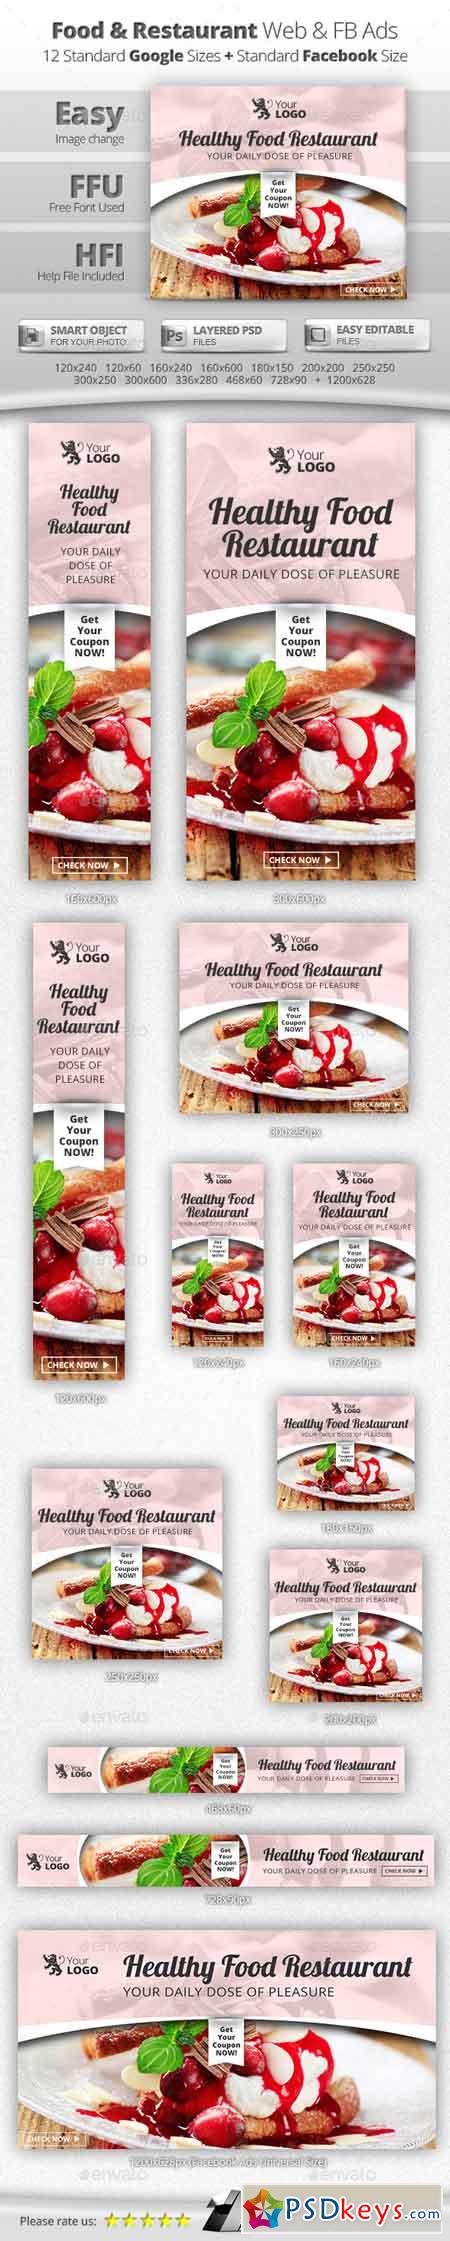 Food & Restaurant Web & Facebook Banners